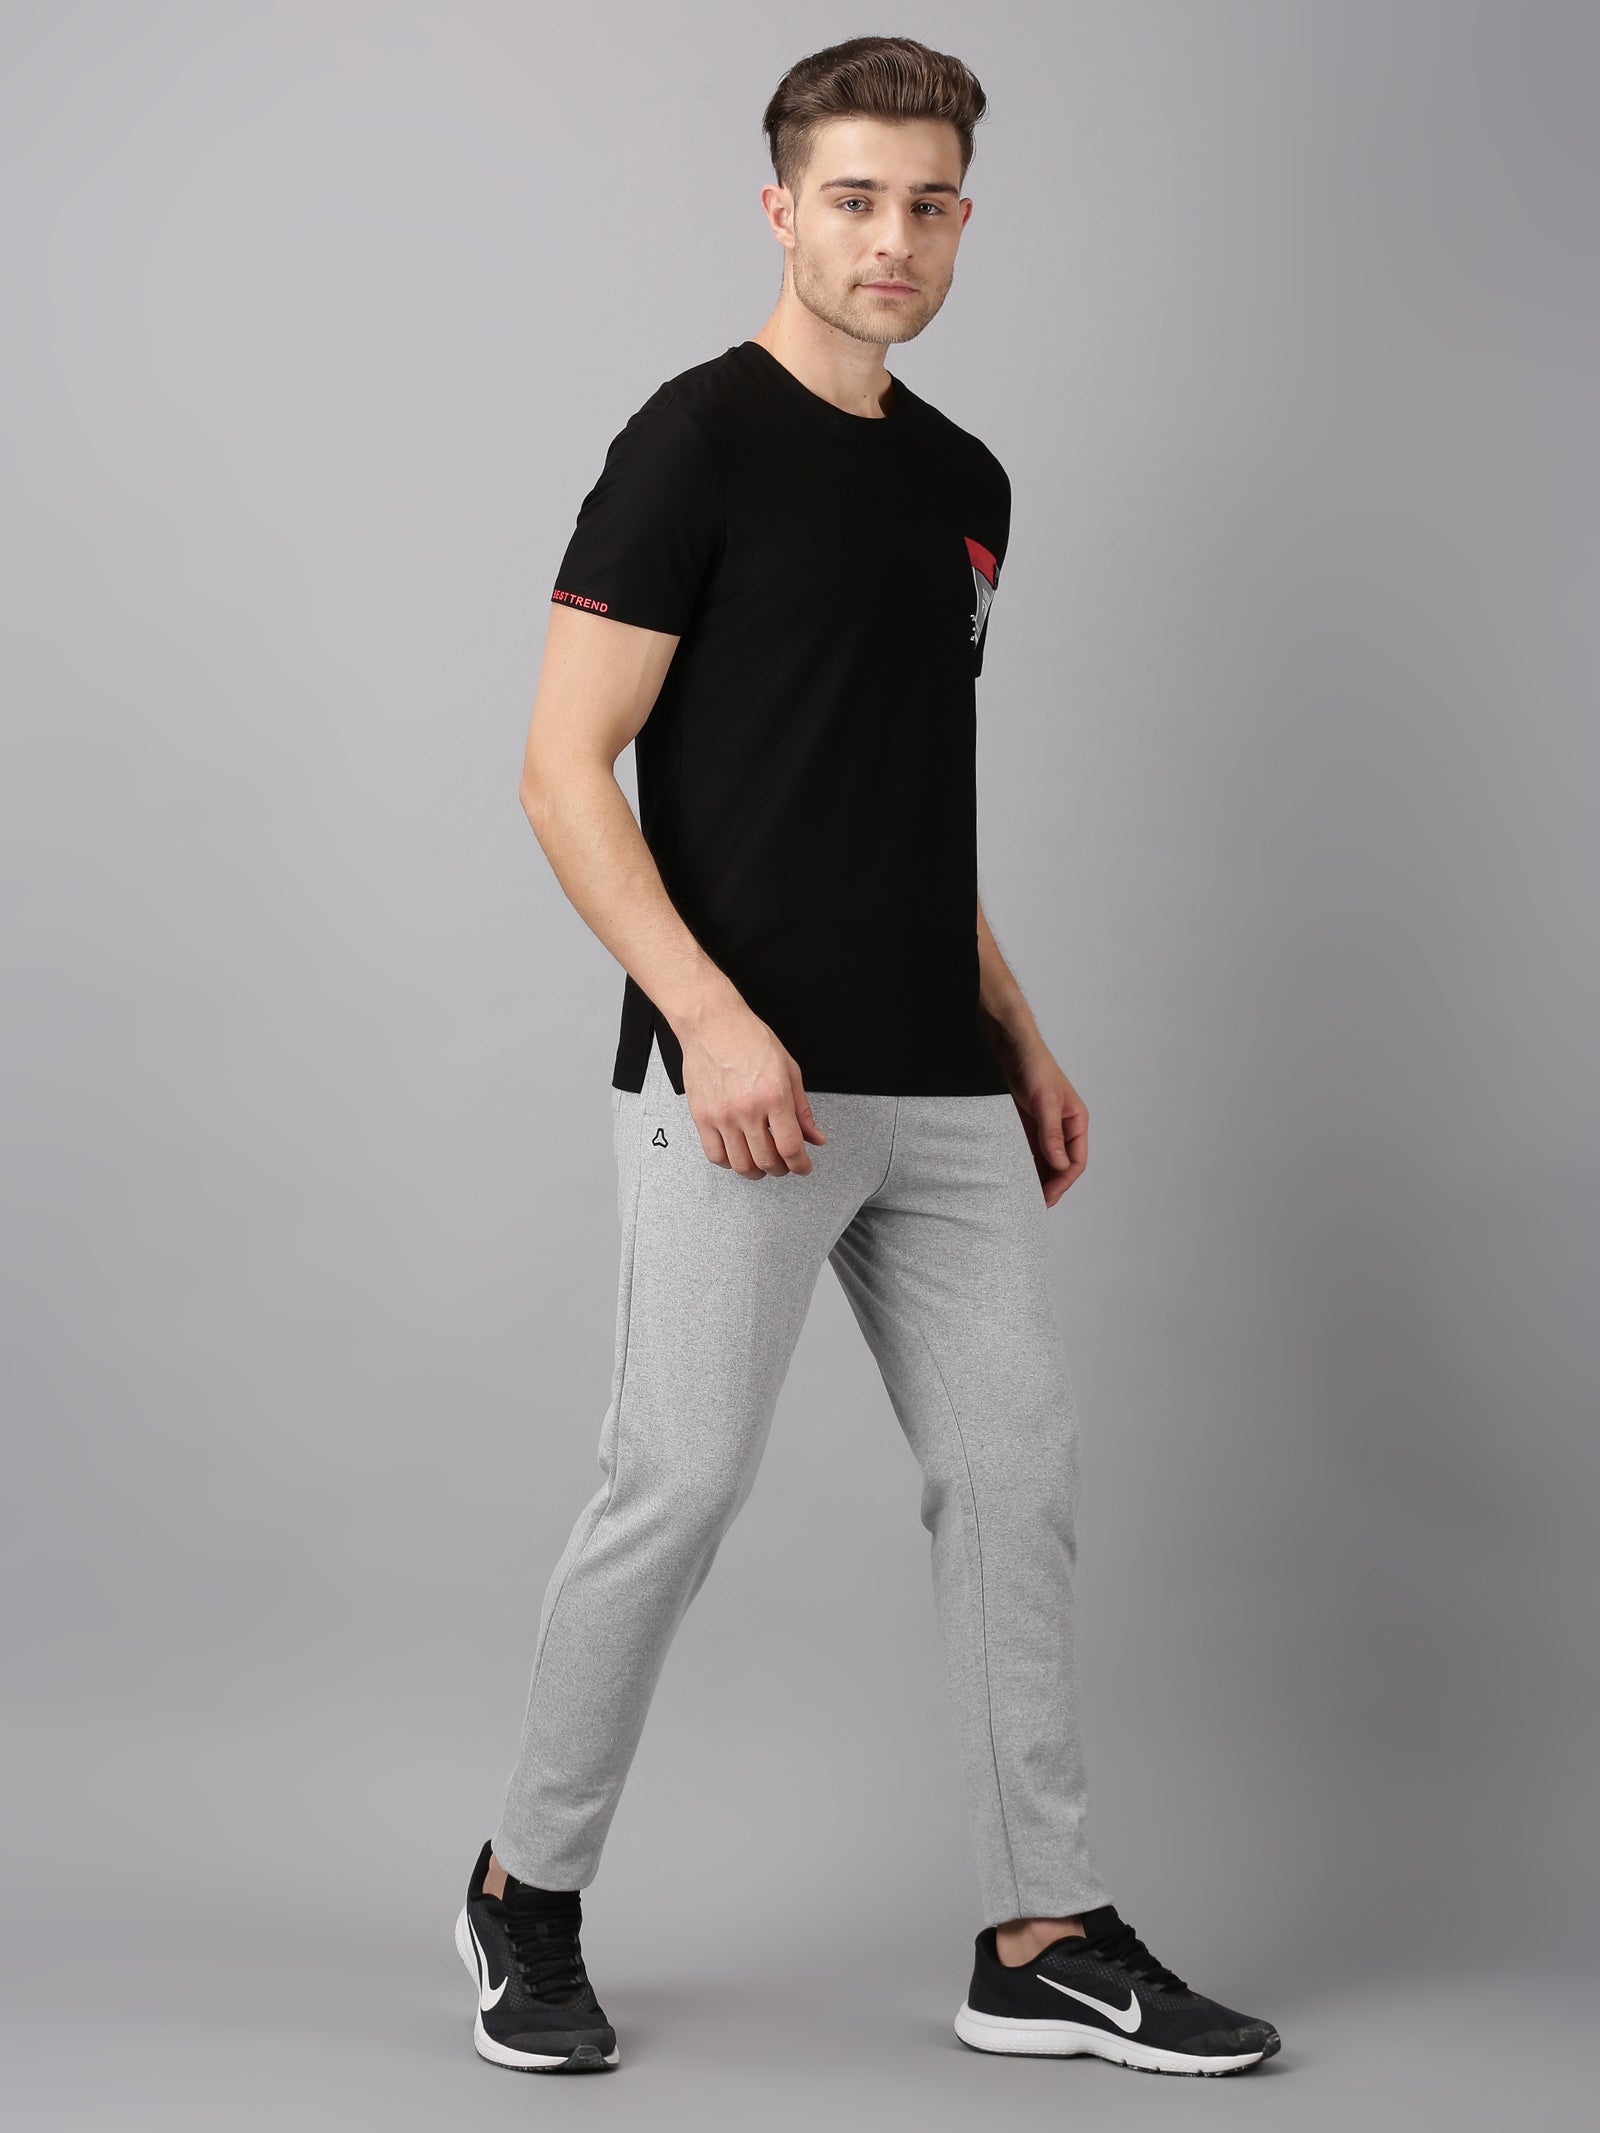 GRIFFEL Black  White Printed TShirt With Track Pants